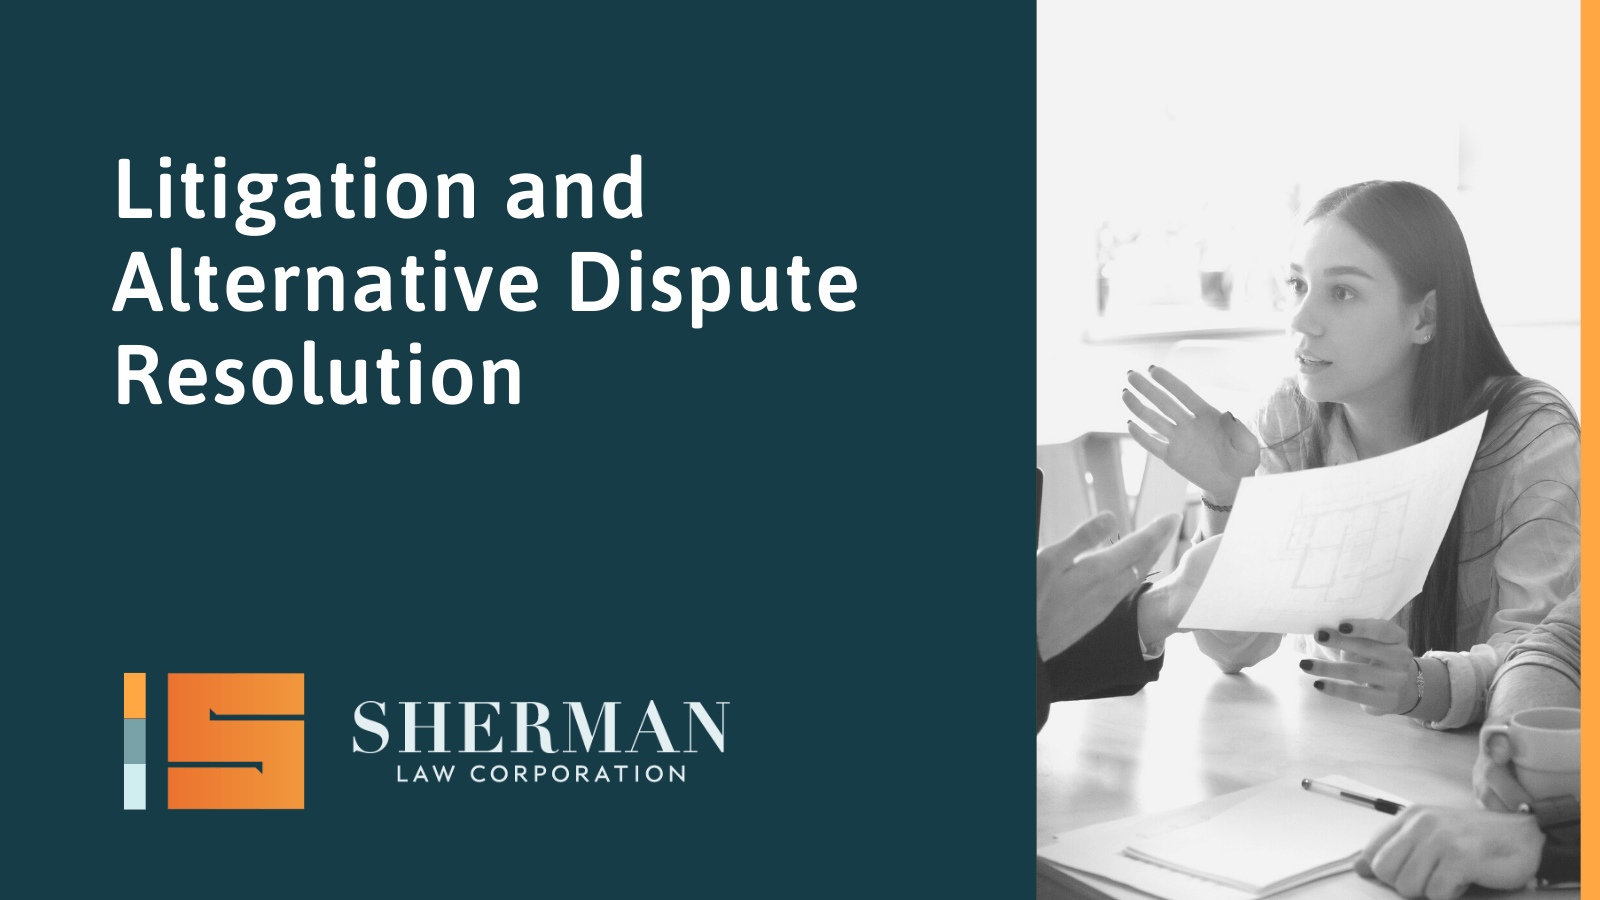 Litigation and Alternative Dispute Resolution- sherman law corporation